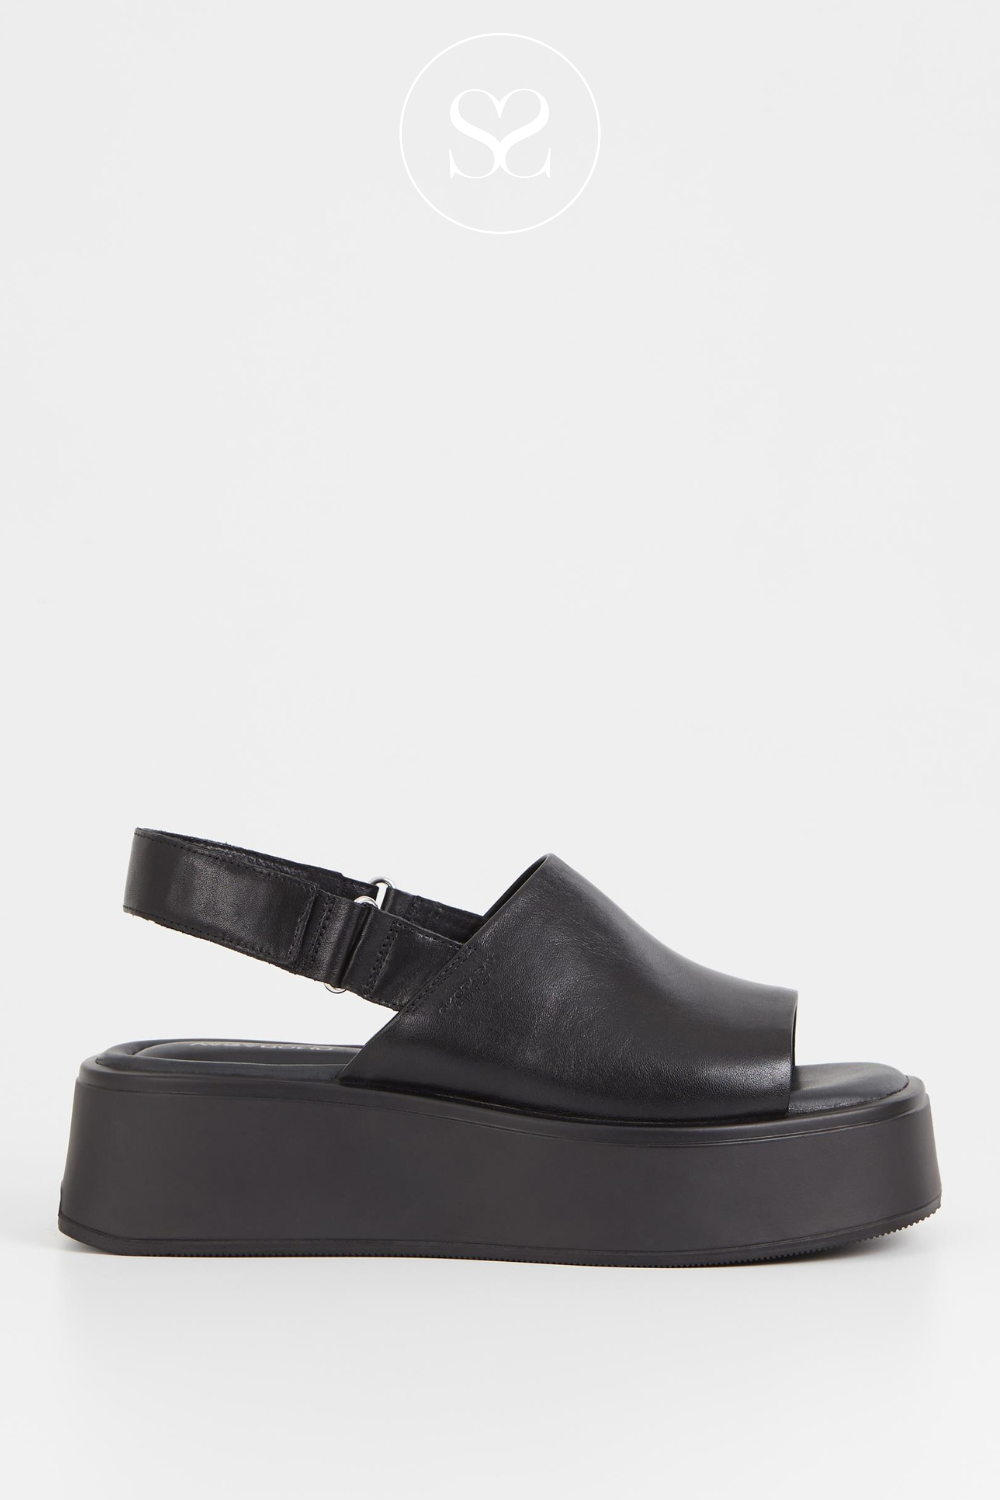 Vagabond courtney chunky black flatform sandals